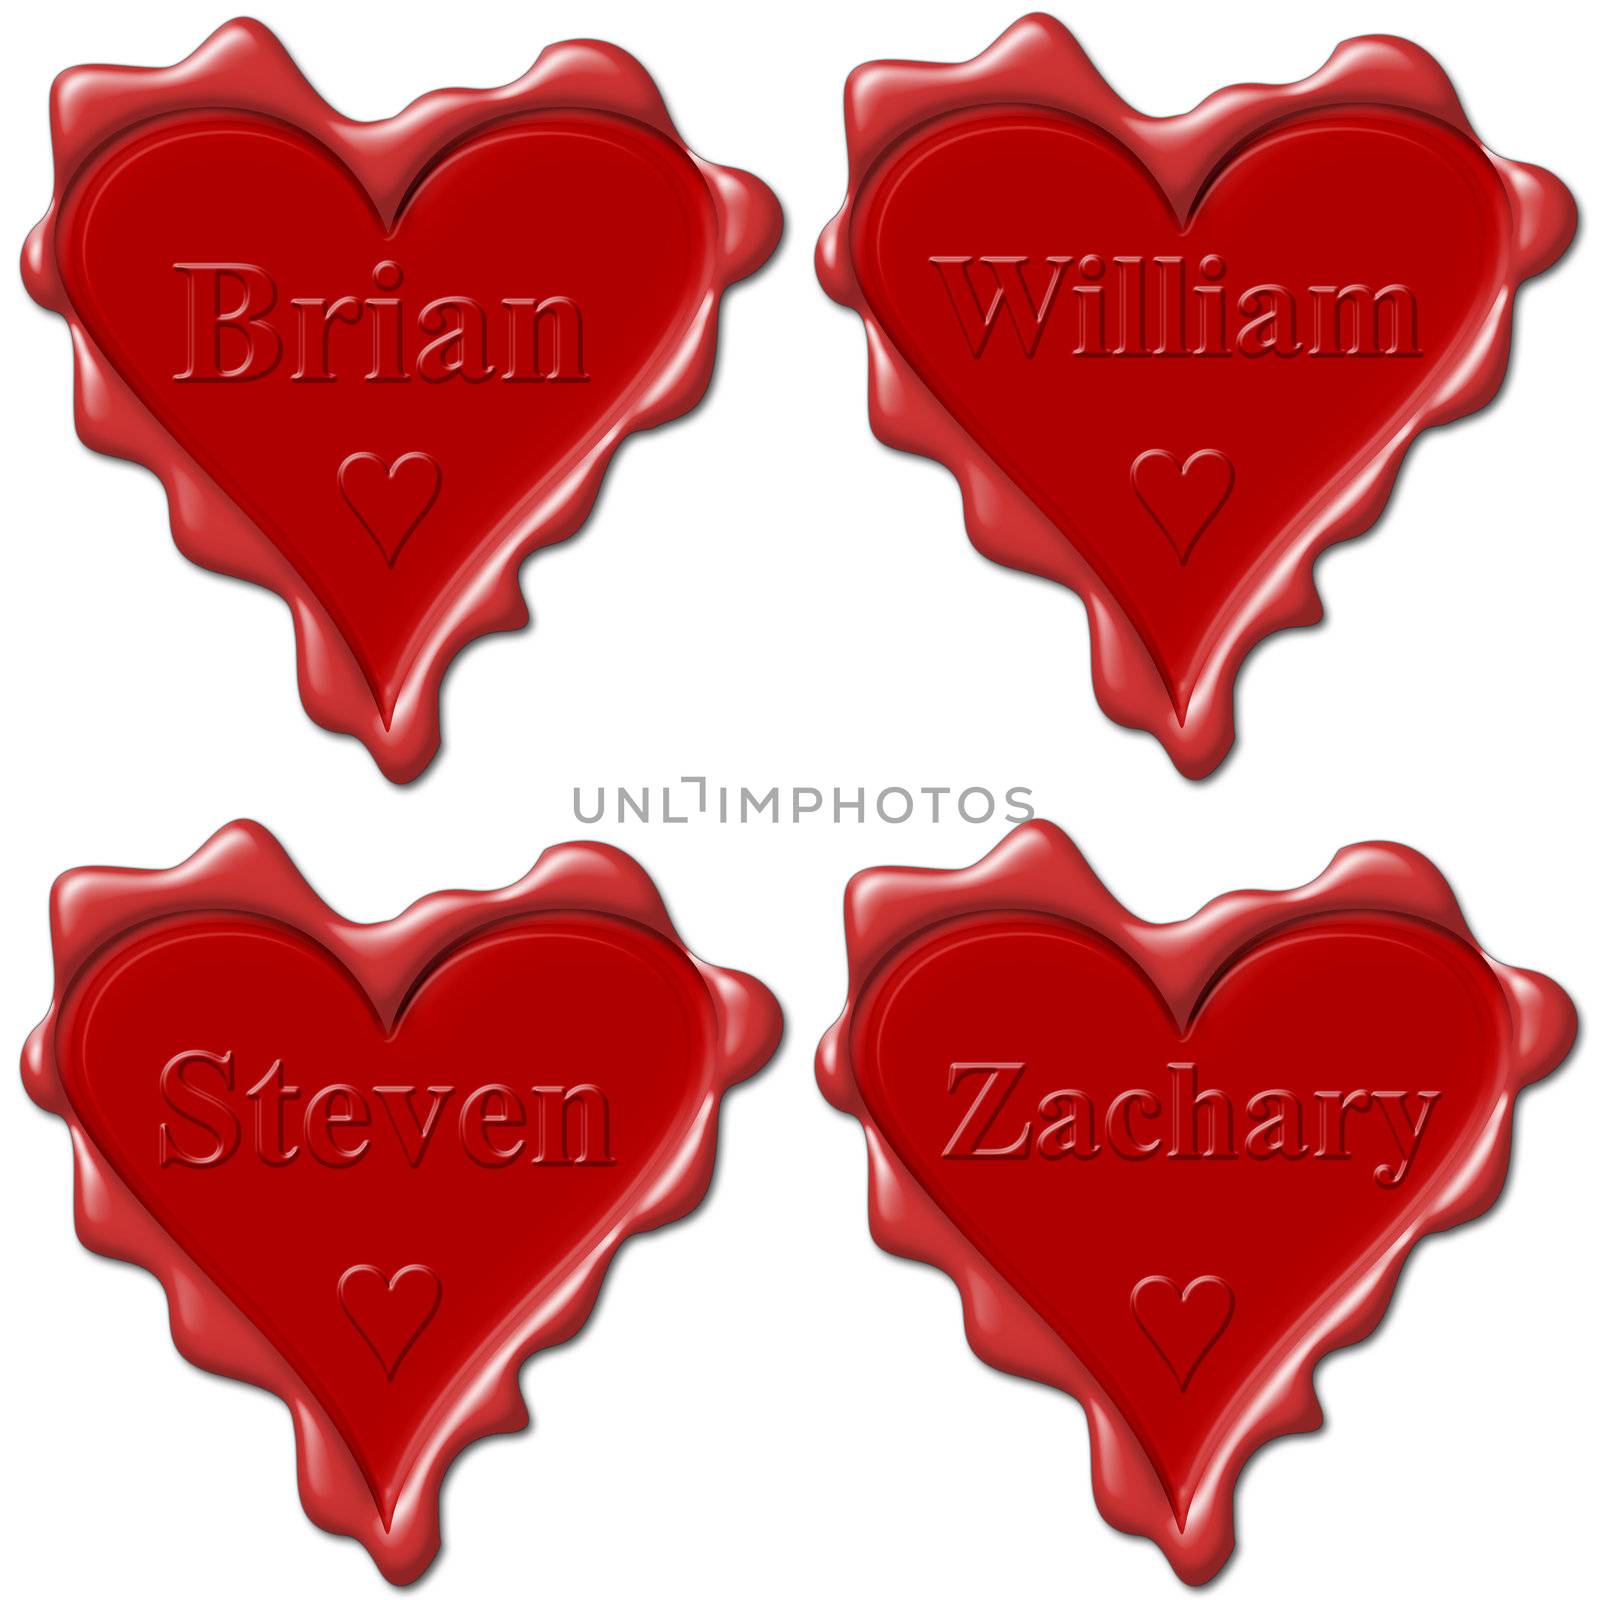 Valentine love hearts with names: Brian, William, Steven, Zachary